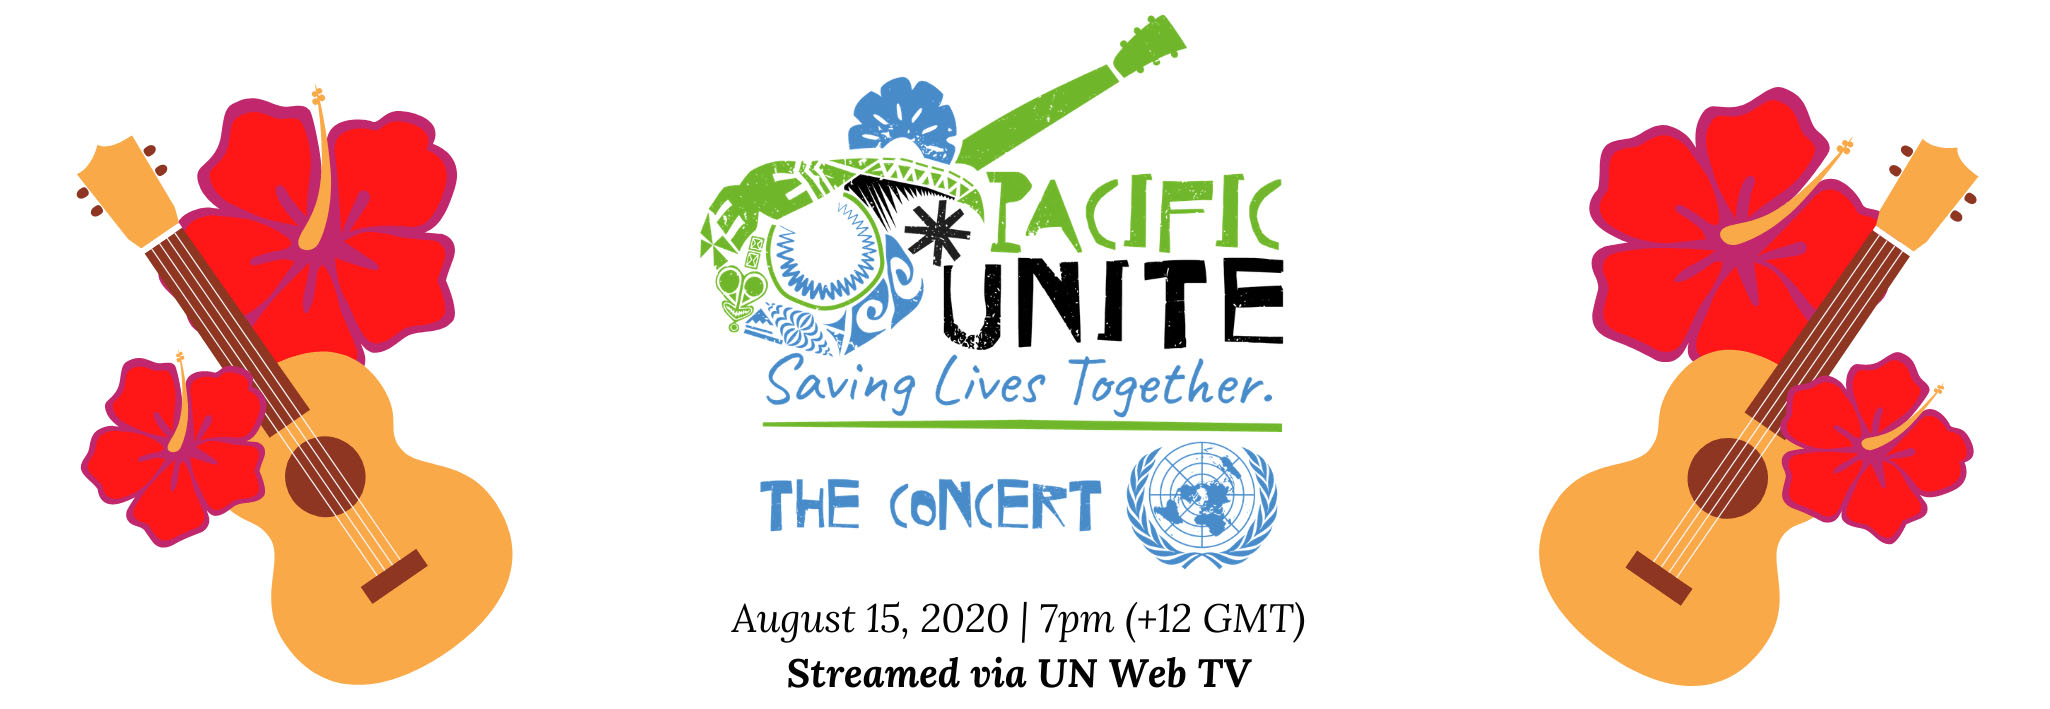 Pacific Unite Concert Image